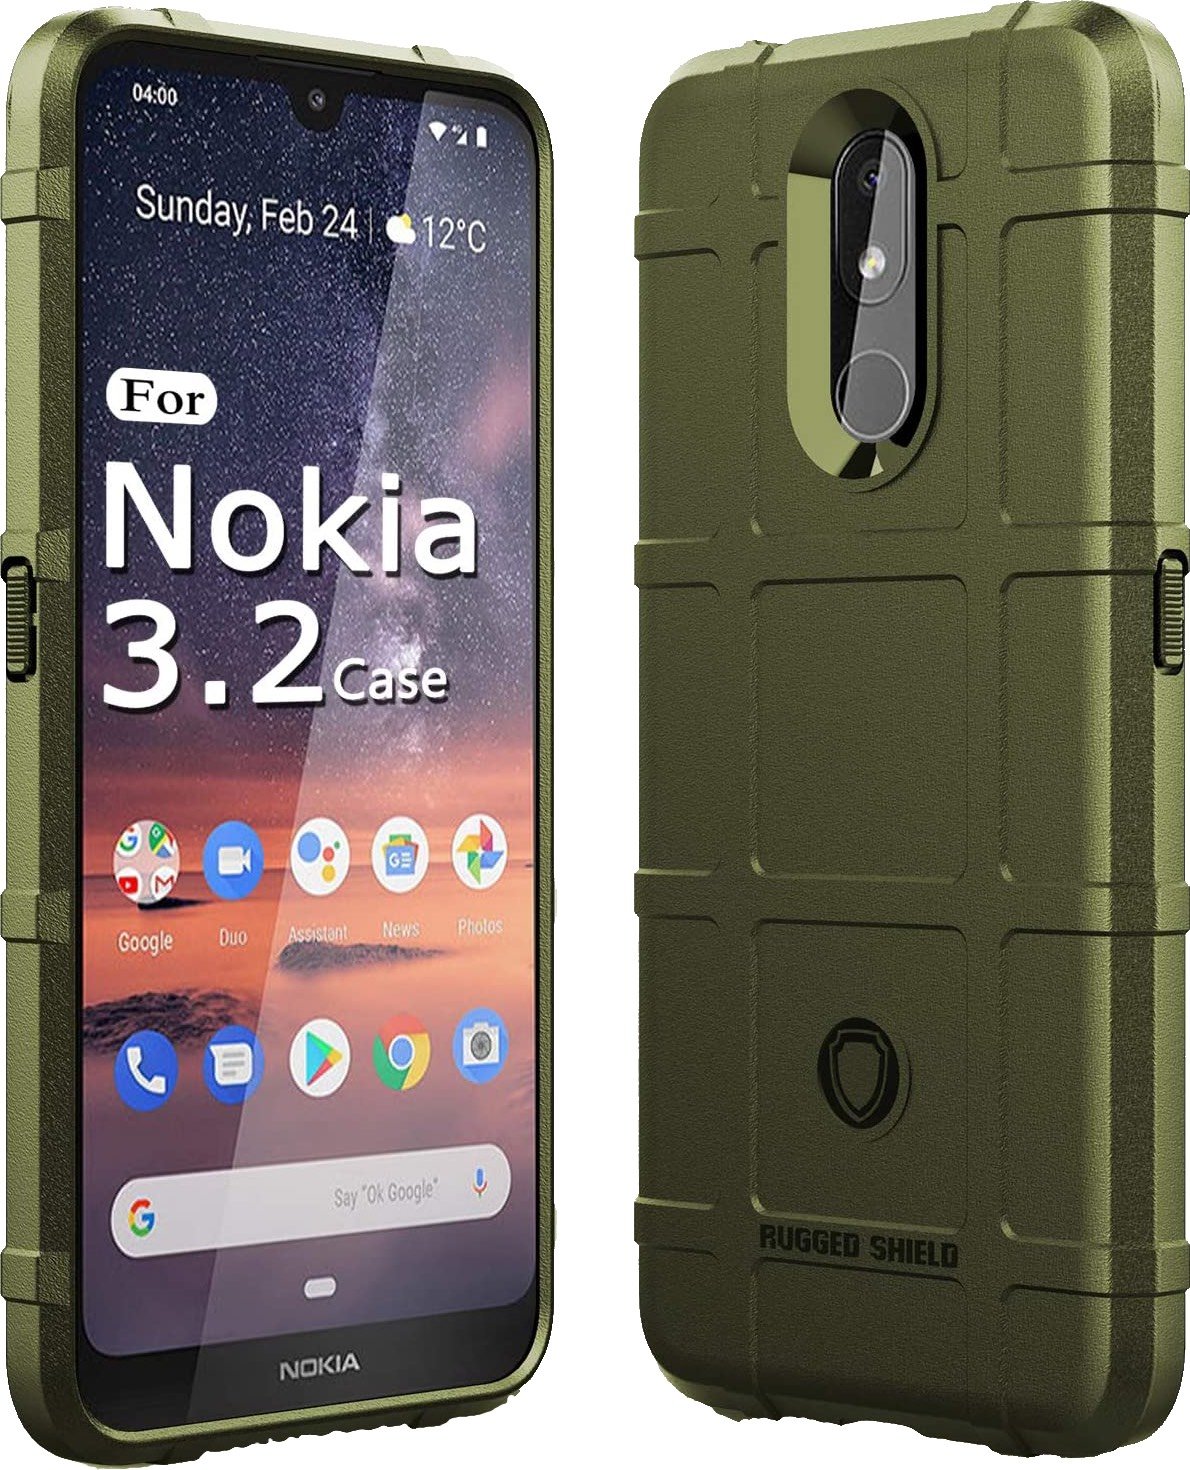 Sucnakp Rugged Nokia 3 2 Case Render